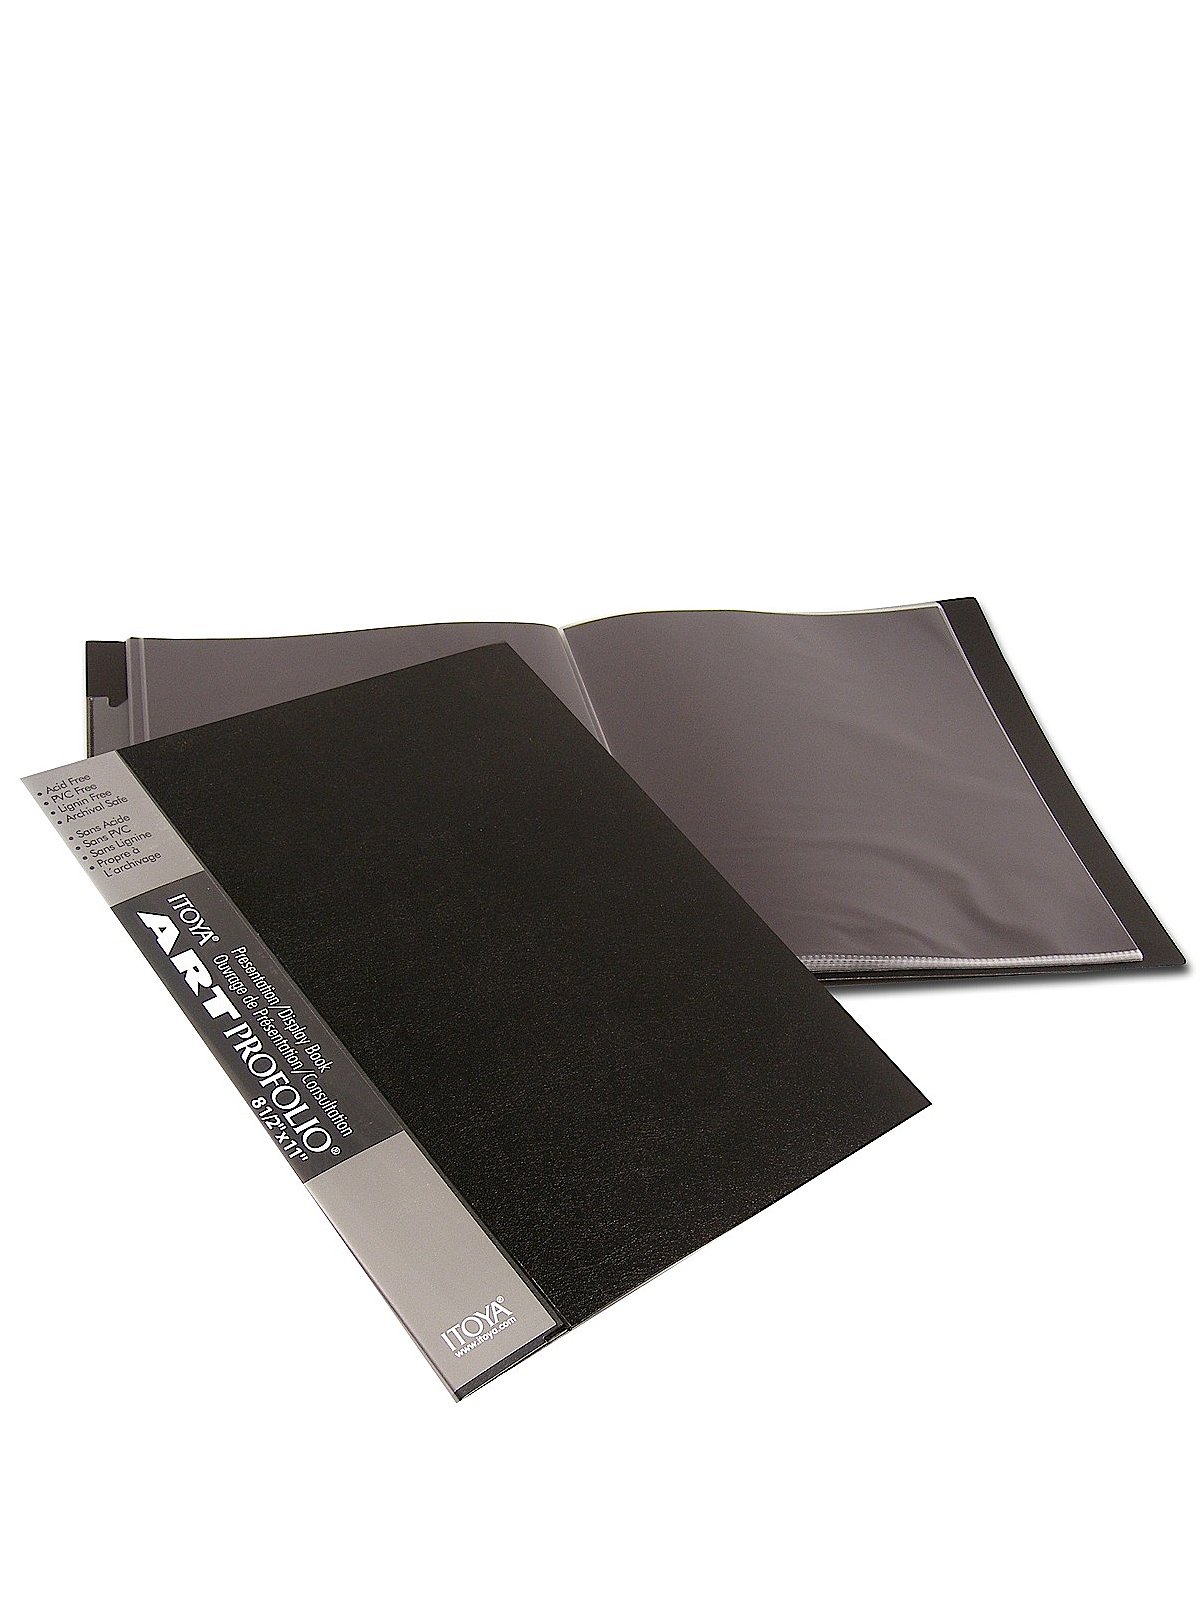 Heavy Duty Binder with Plastic Sleeves 18X24, Portfolio Folder